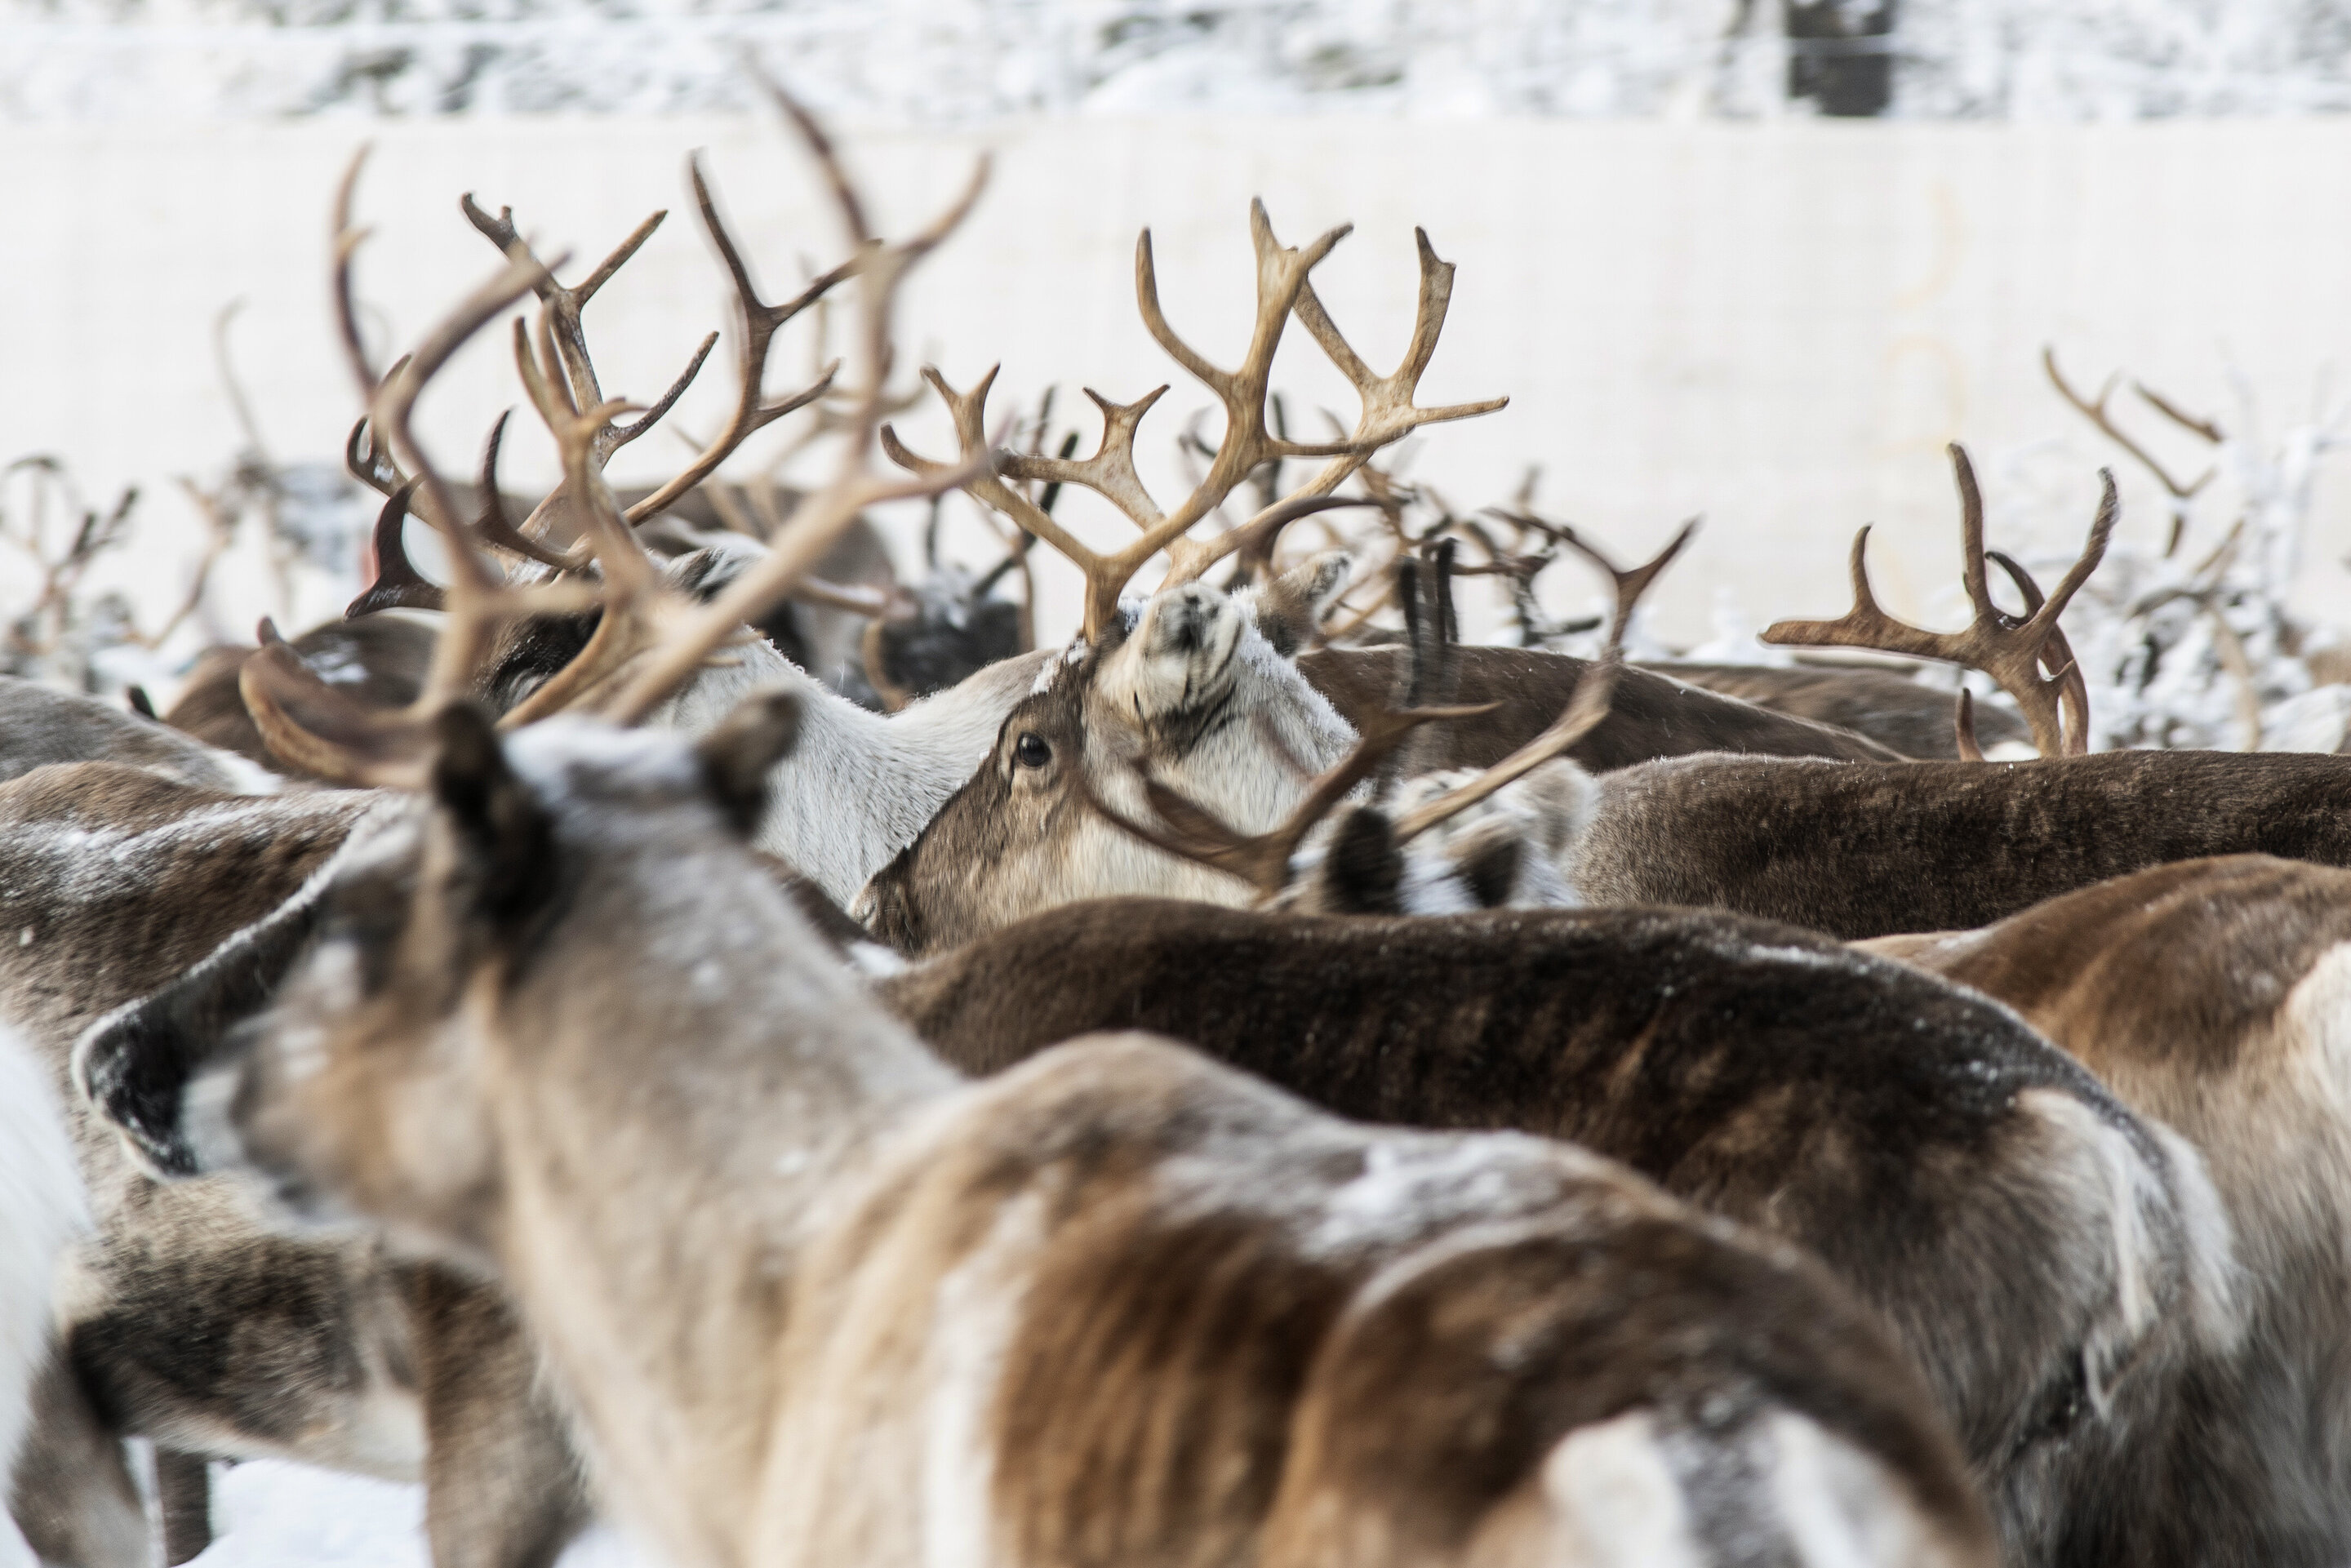 In Sweden's Arctic, global warming threatens reindeer herds - Phys.Org